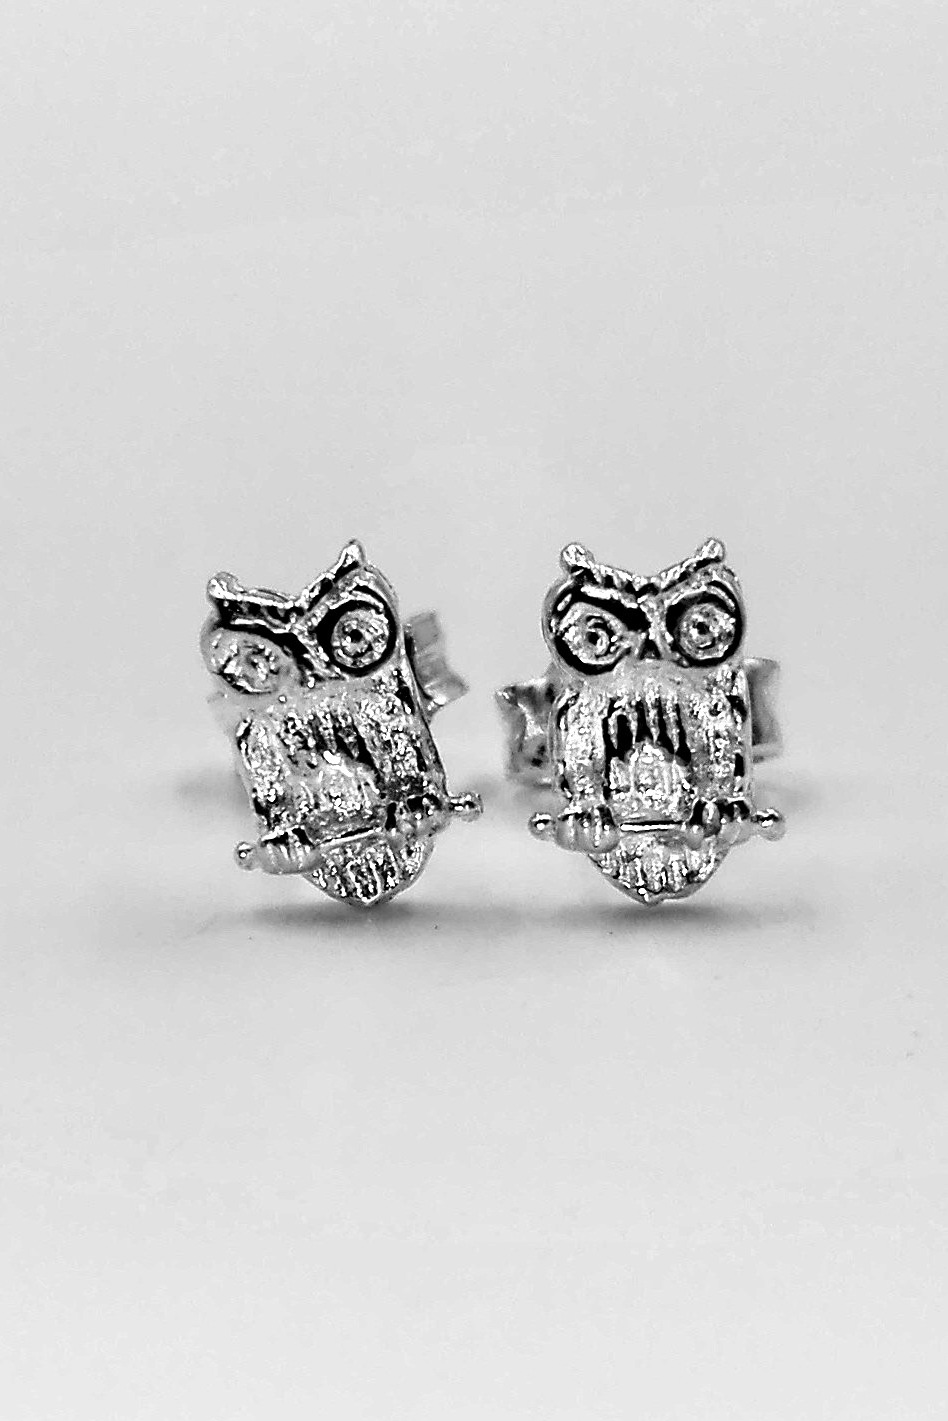 Silver Stud Owl Earrings Bird Earrings Animal Earrings Tiny Earrings Dainty Earrings Jewelry Gift For Her Everyday Earrings